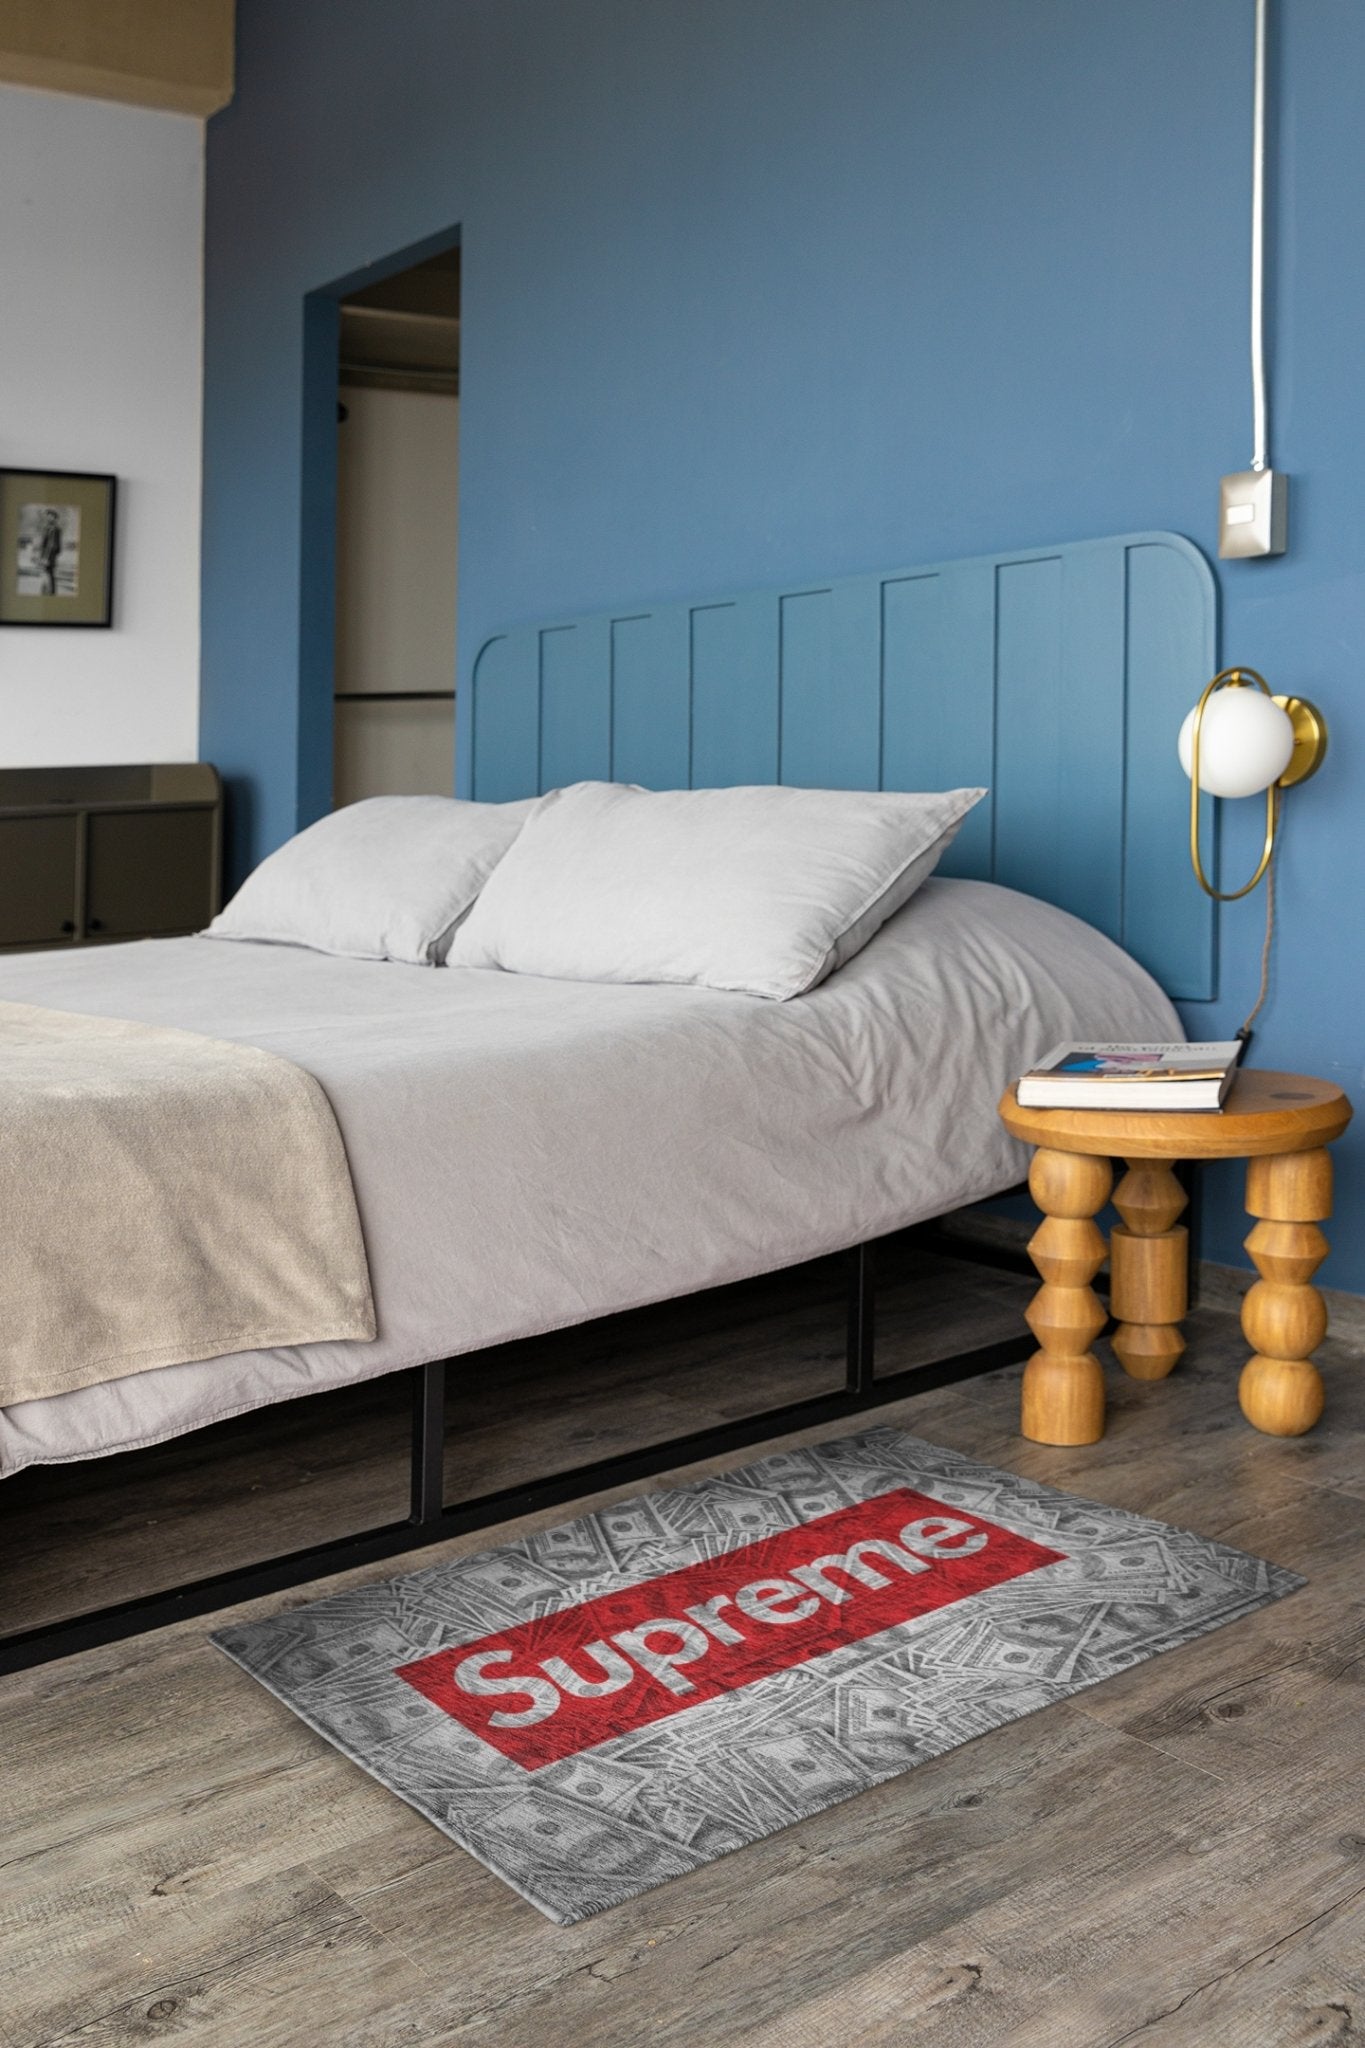 Best Price] Supreme Area Rug Red Hypebeast Carpet Luxurious Fashion Brand  Logo Living Room Rugs Floor Decor